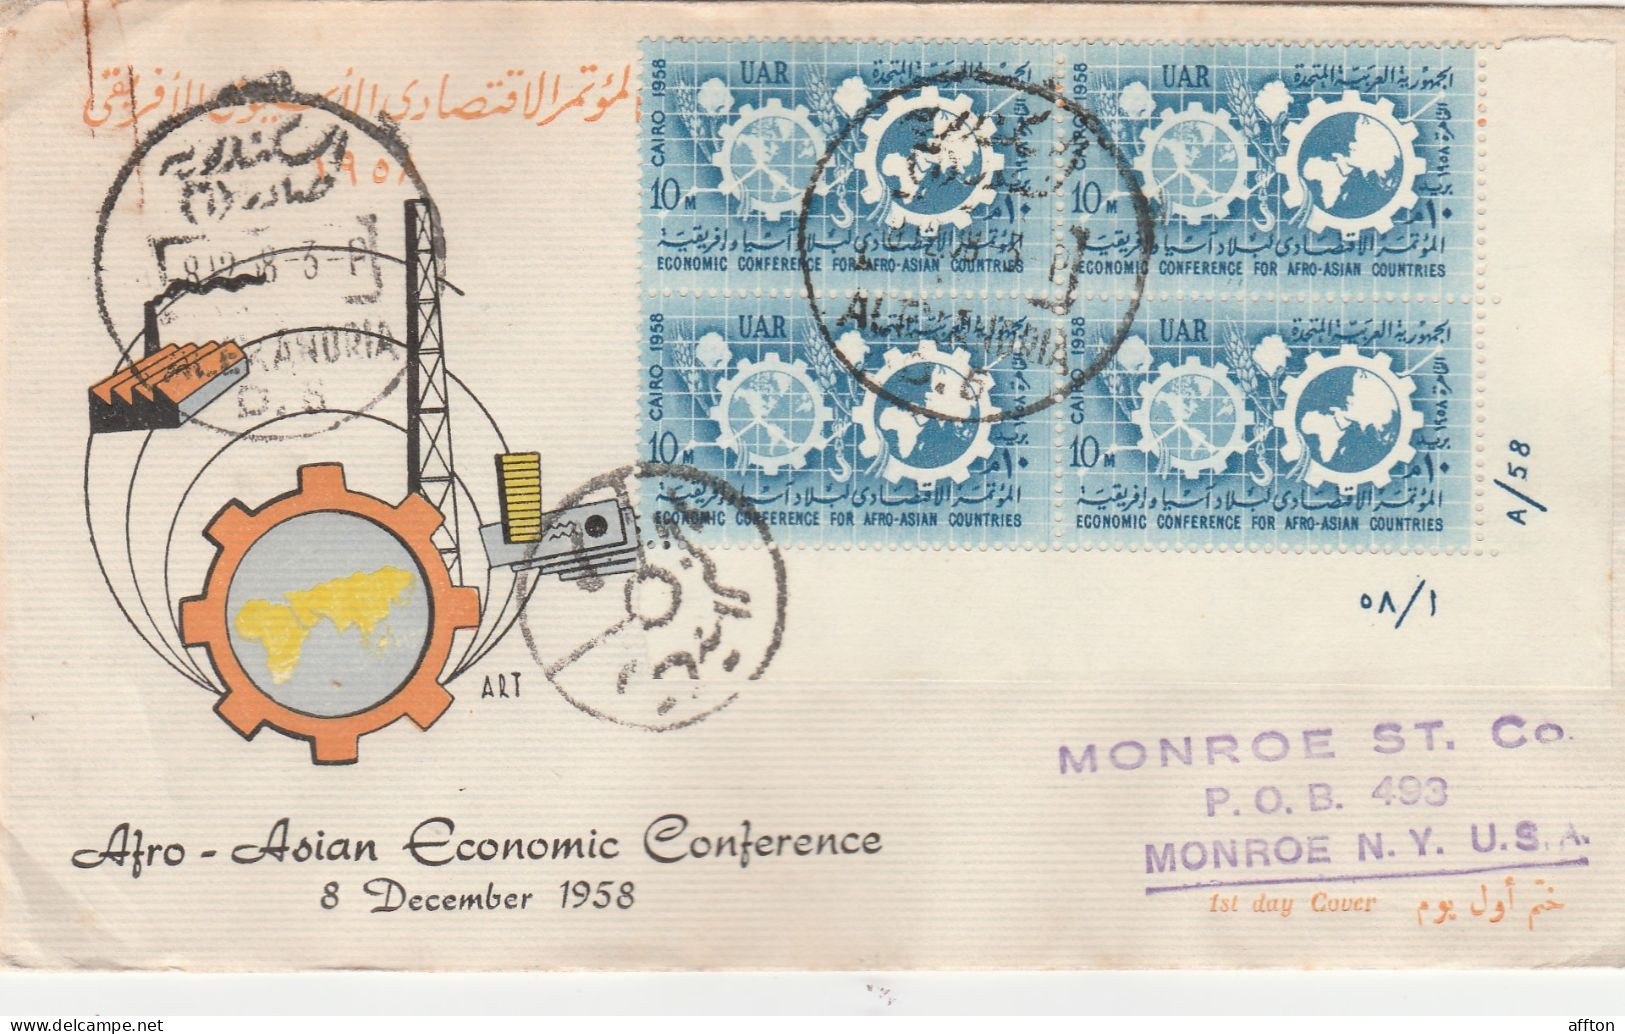 Egypt 1958 FDC Mailed - Storia Postale